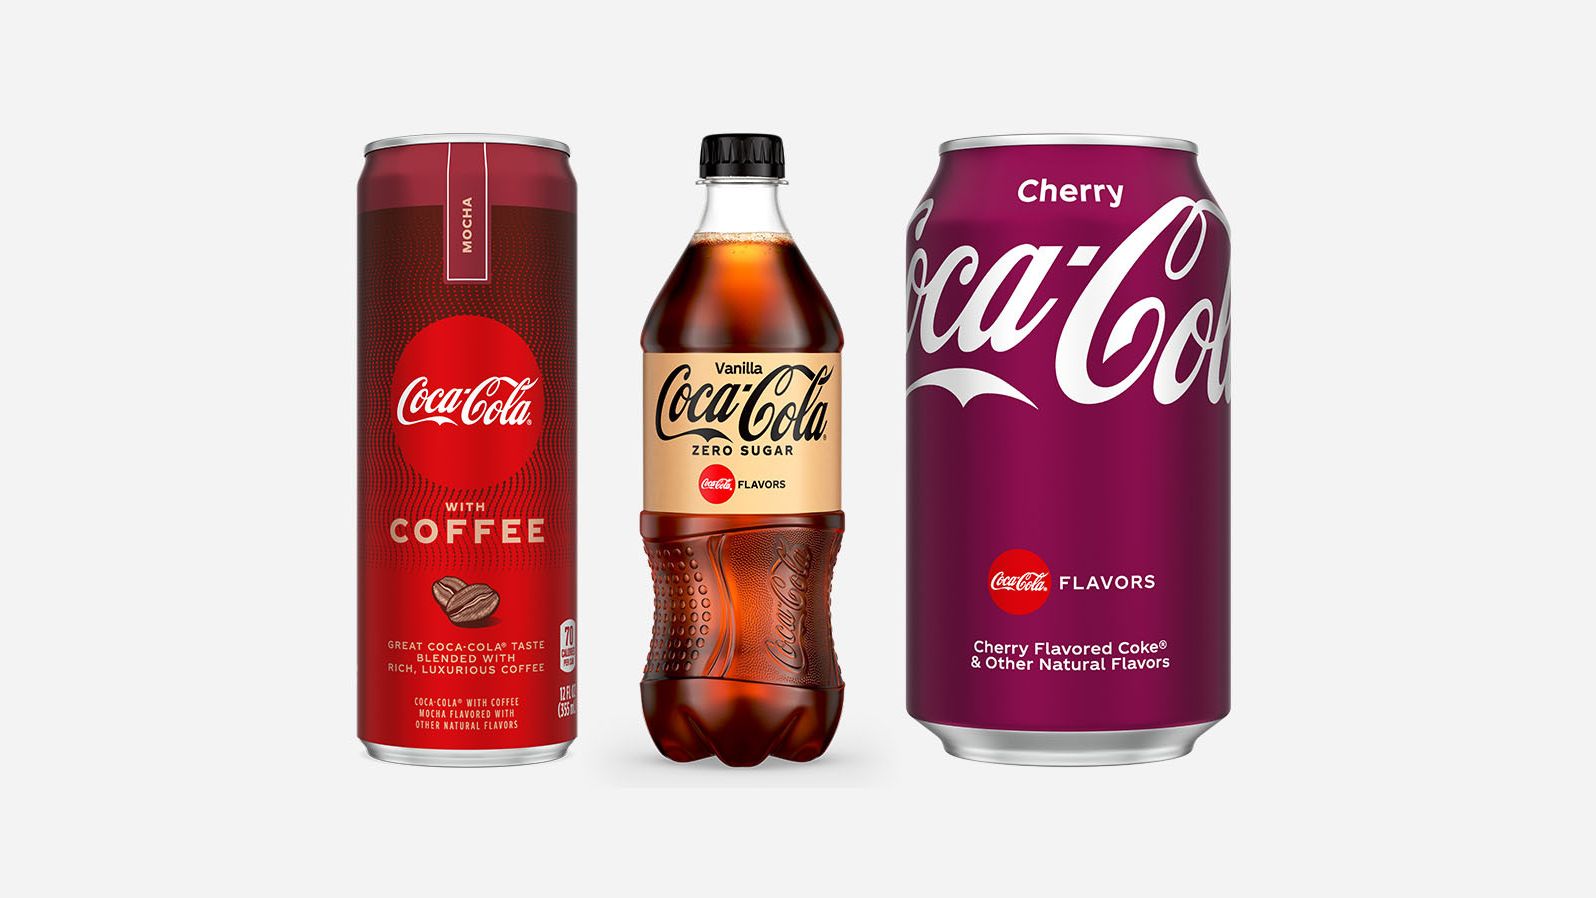 https://media.cnn.com/api/v1/images/stellar/prod/220118162534-embargoed-new-coke-flavored-redesign-vanilla-cherry-mocha.jpg?c=16x9